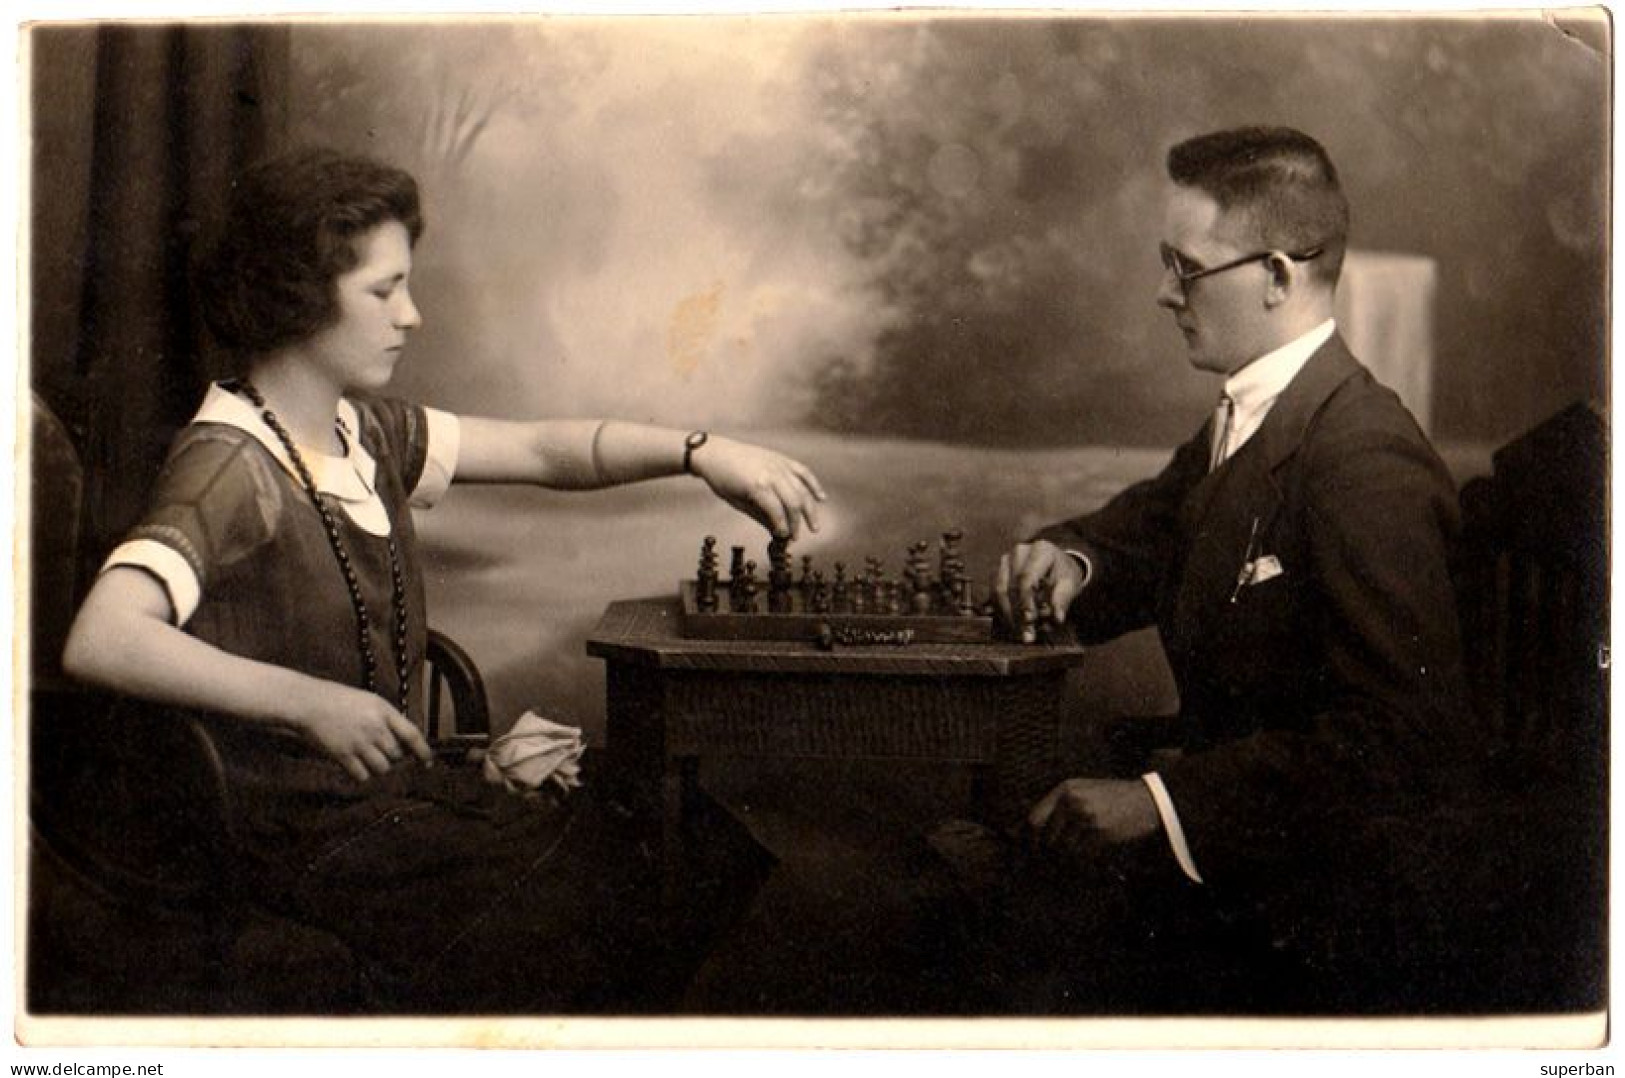 ECHECS / CHESS : ROUMANIE / ROMANIA : CHESS GAME / PARTIE D'ECHECS - CARTE VRAIE PHOTO / REAL PHOTO ~ 1935 - '40 (an322) - Scacchi